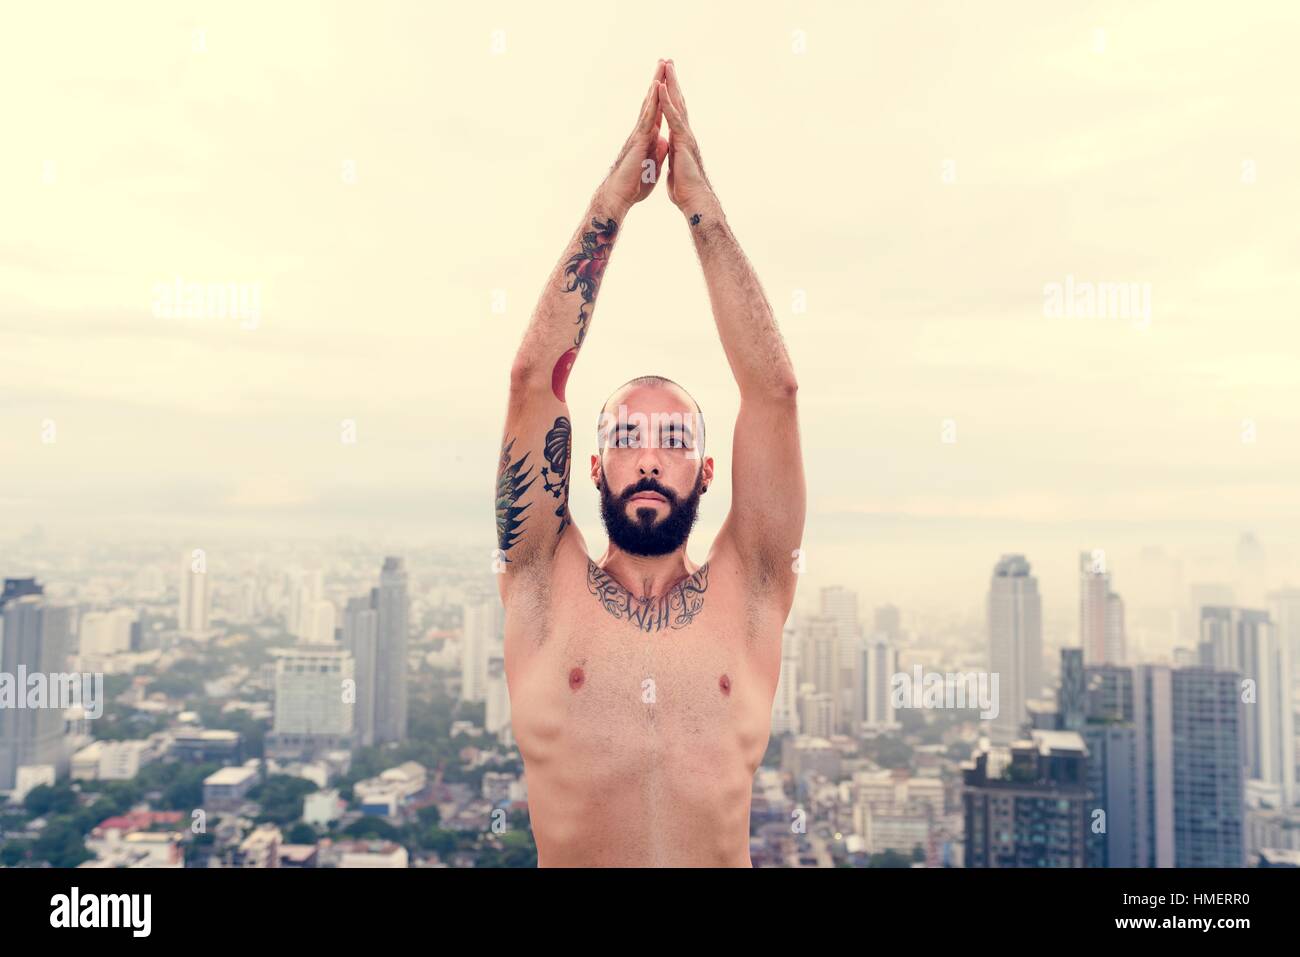 Man Practice Yoga Rooftop Concept Stock Photo